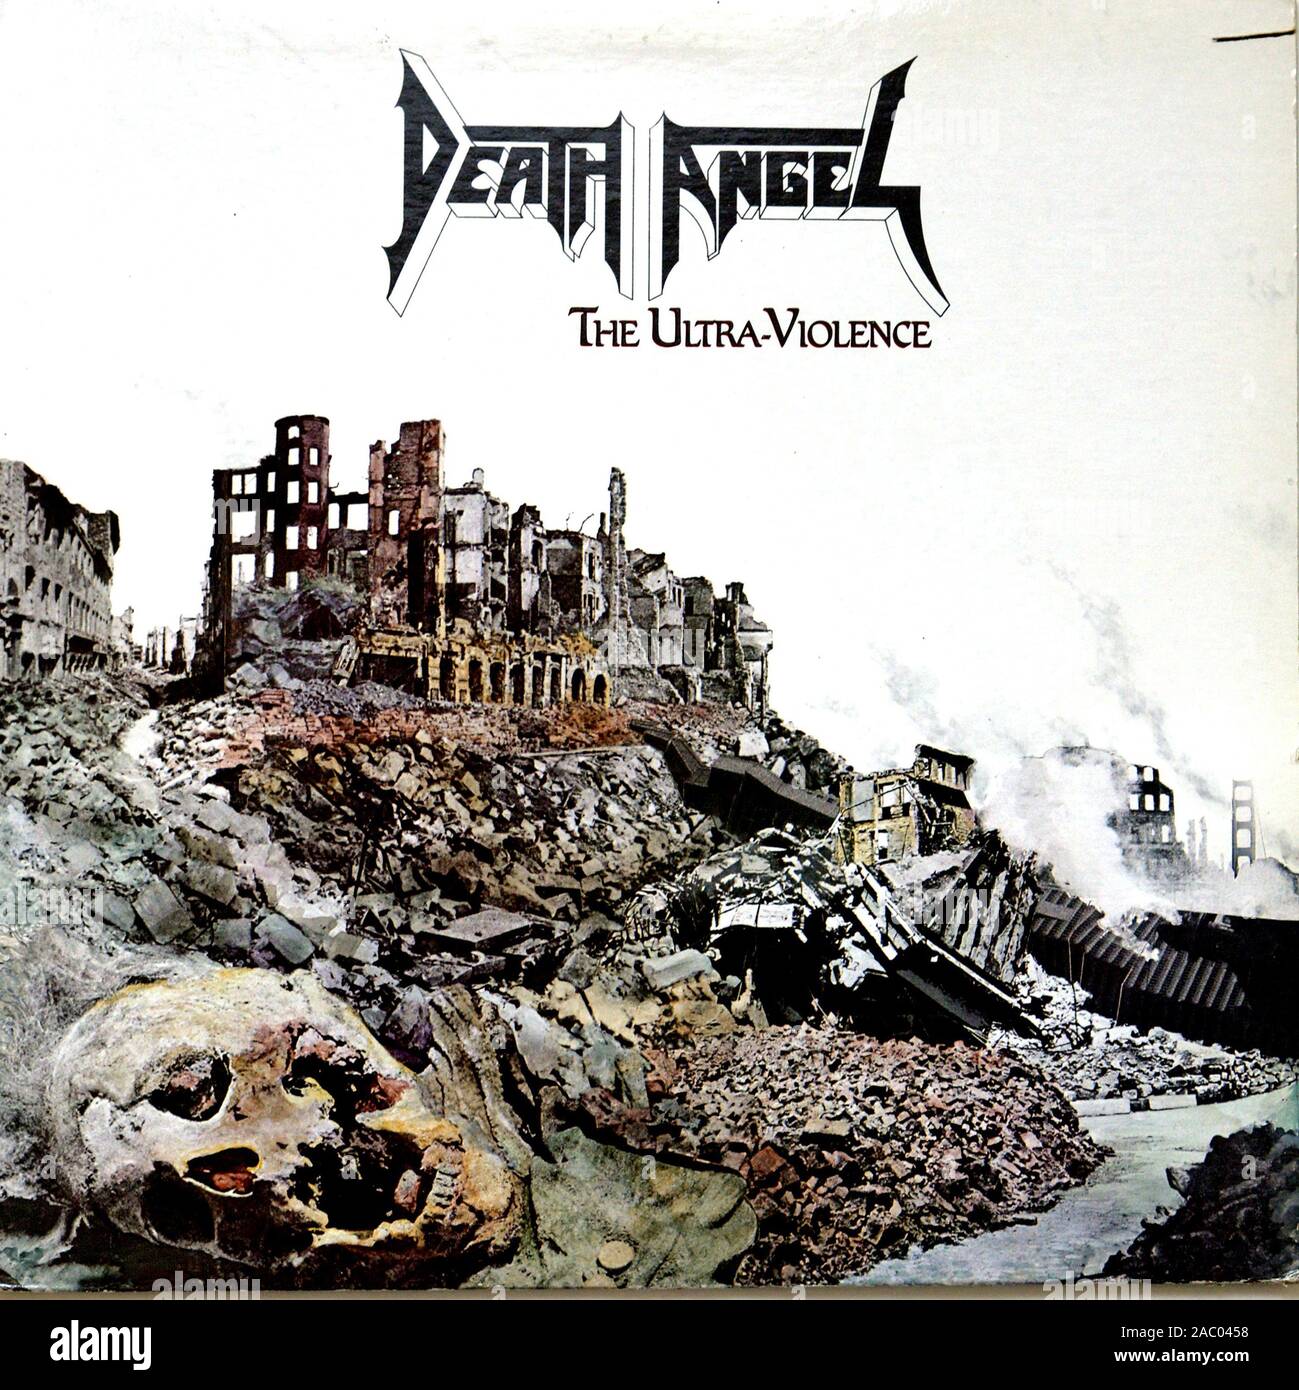 DEATH ANGEL The Ultra-Violence - Vintage vinyl album cover Stock Photo